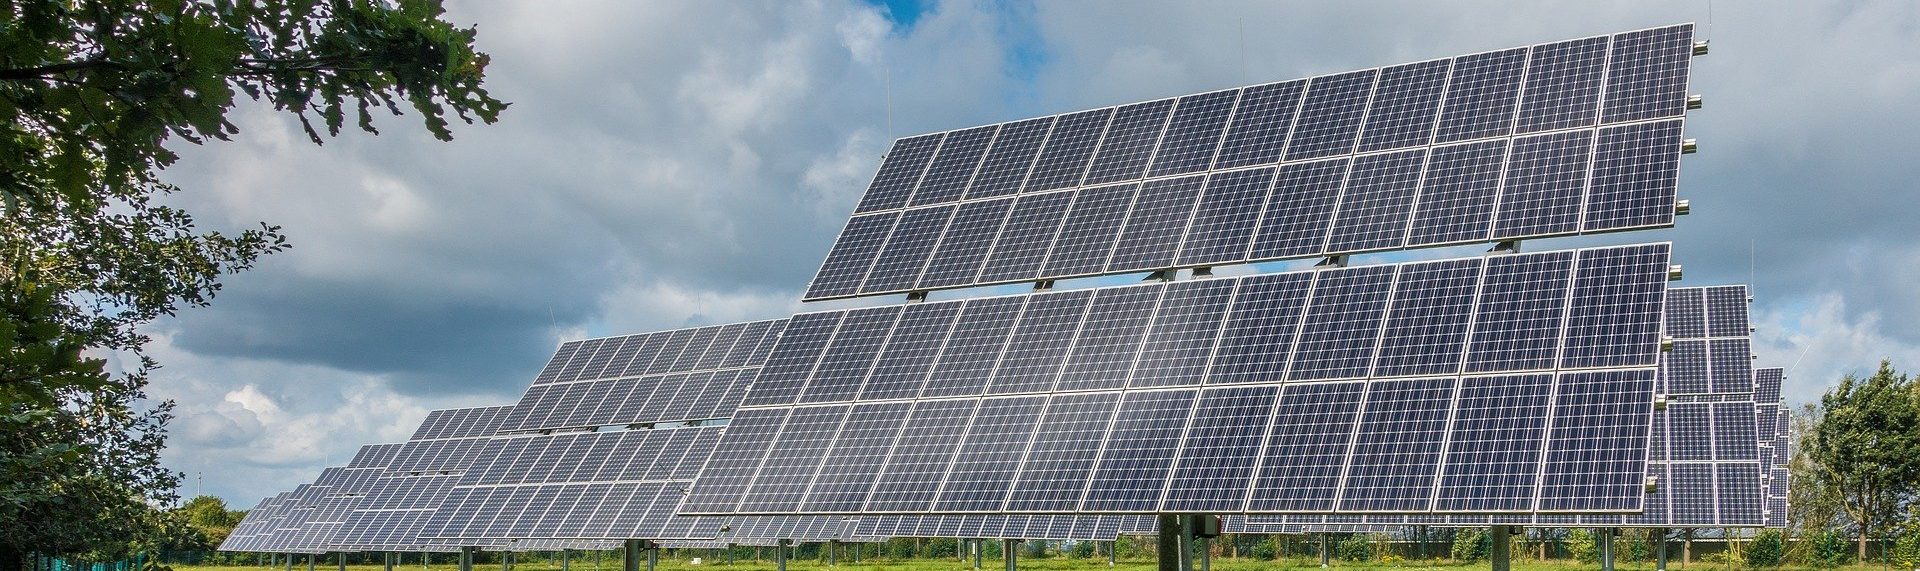 Solar Energy News – What’s New in Solar Energy?